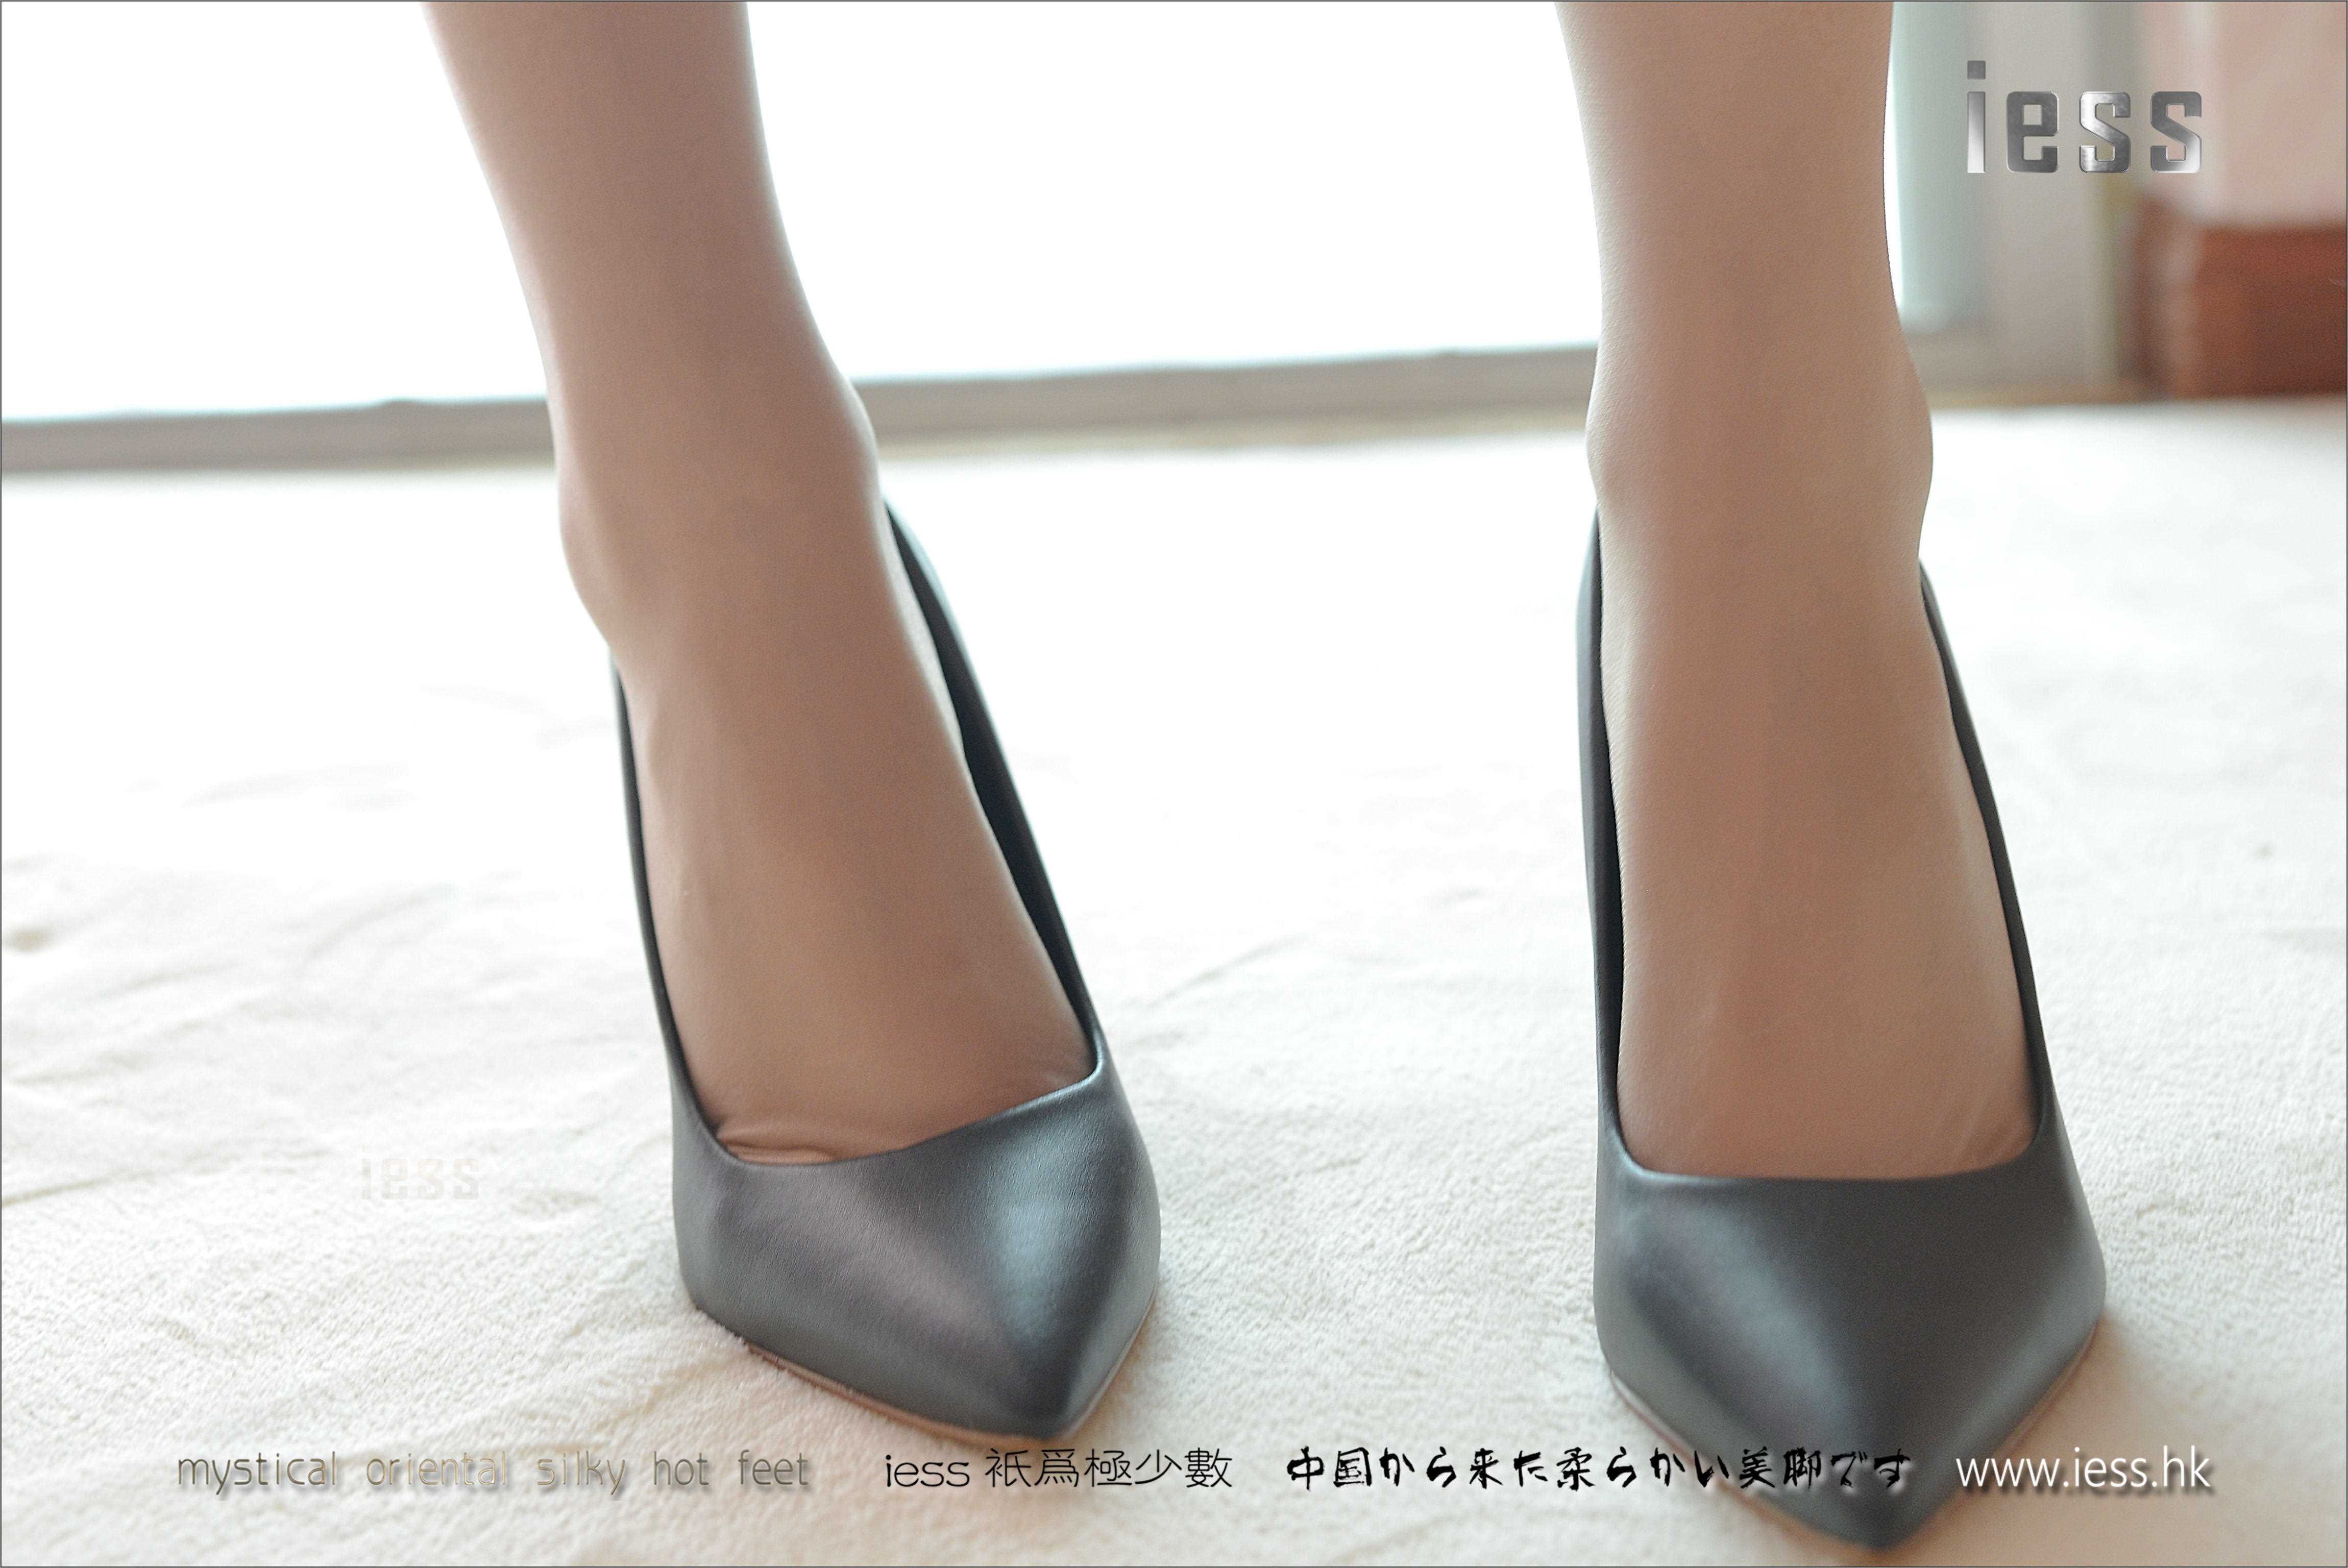 China Beauty Legs and feet 198